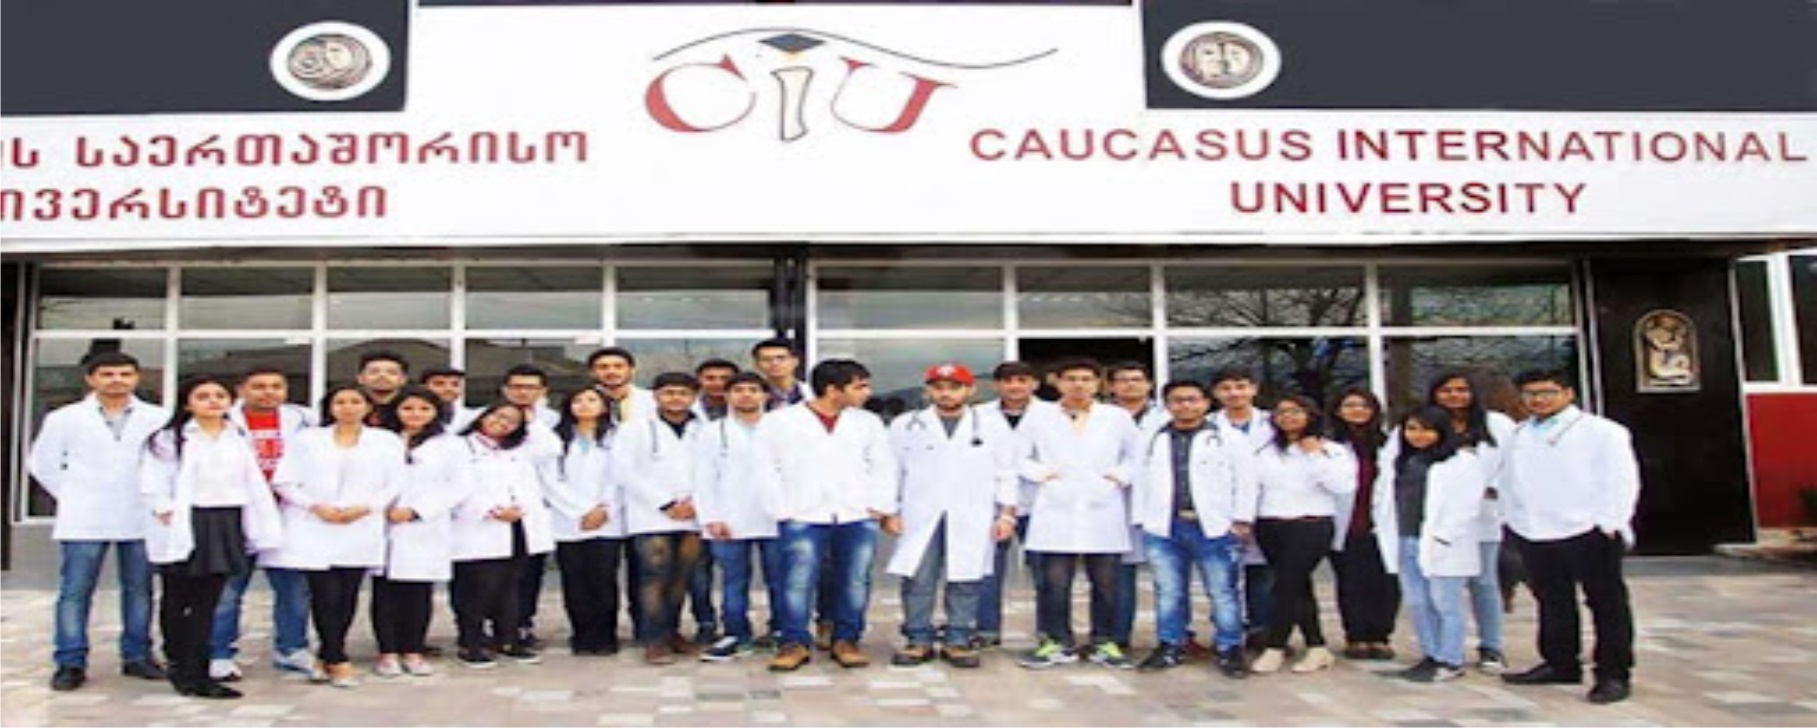 Caucasus's International University (CIU) NEW 9